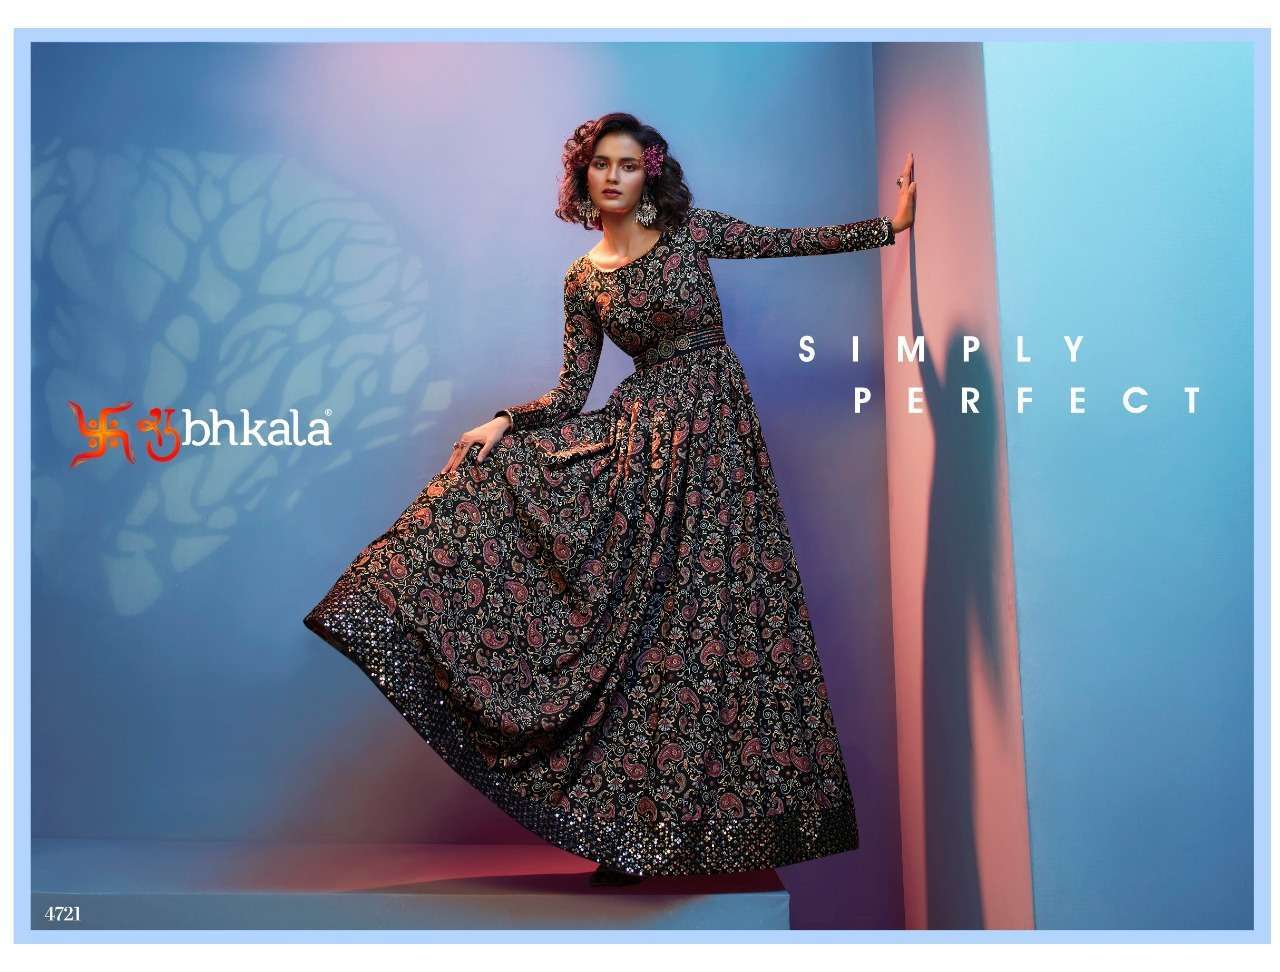 FLORY VOL. 19 Printed Long Anarkali Gown Kurti Ladies Kurti Designs Wholesale India